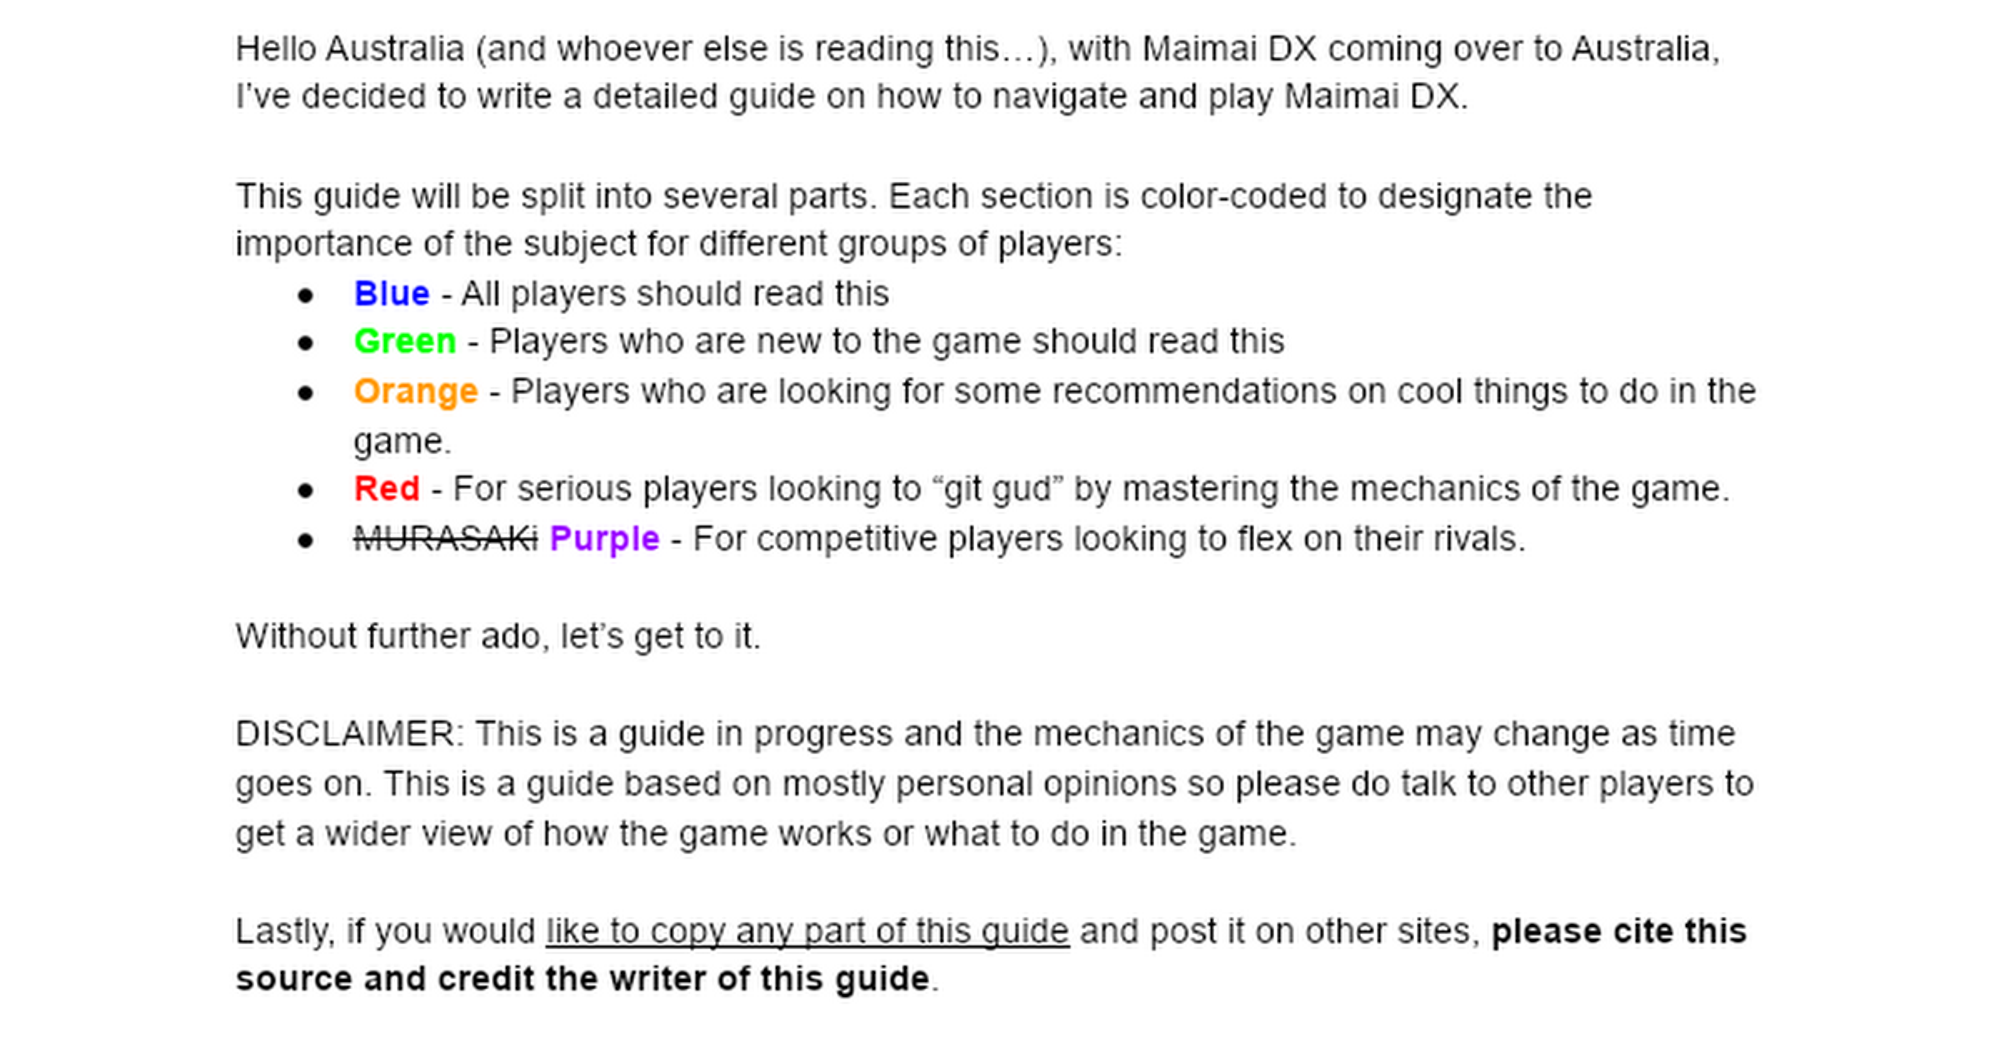 Maimai DX Guide (Australia) - AKA how to play a rhythmic spin cycle washing machine game